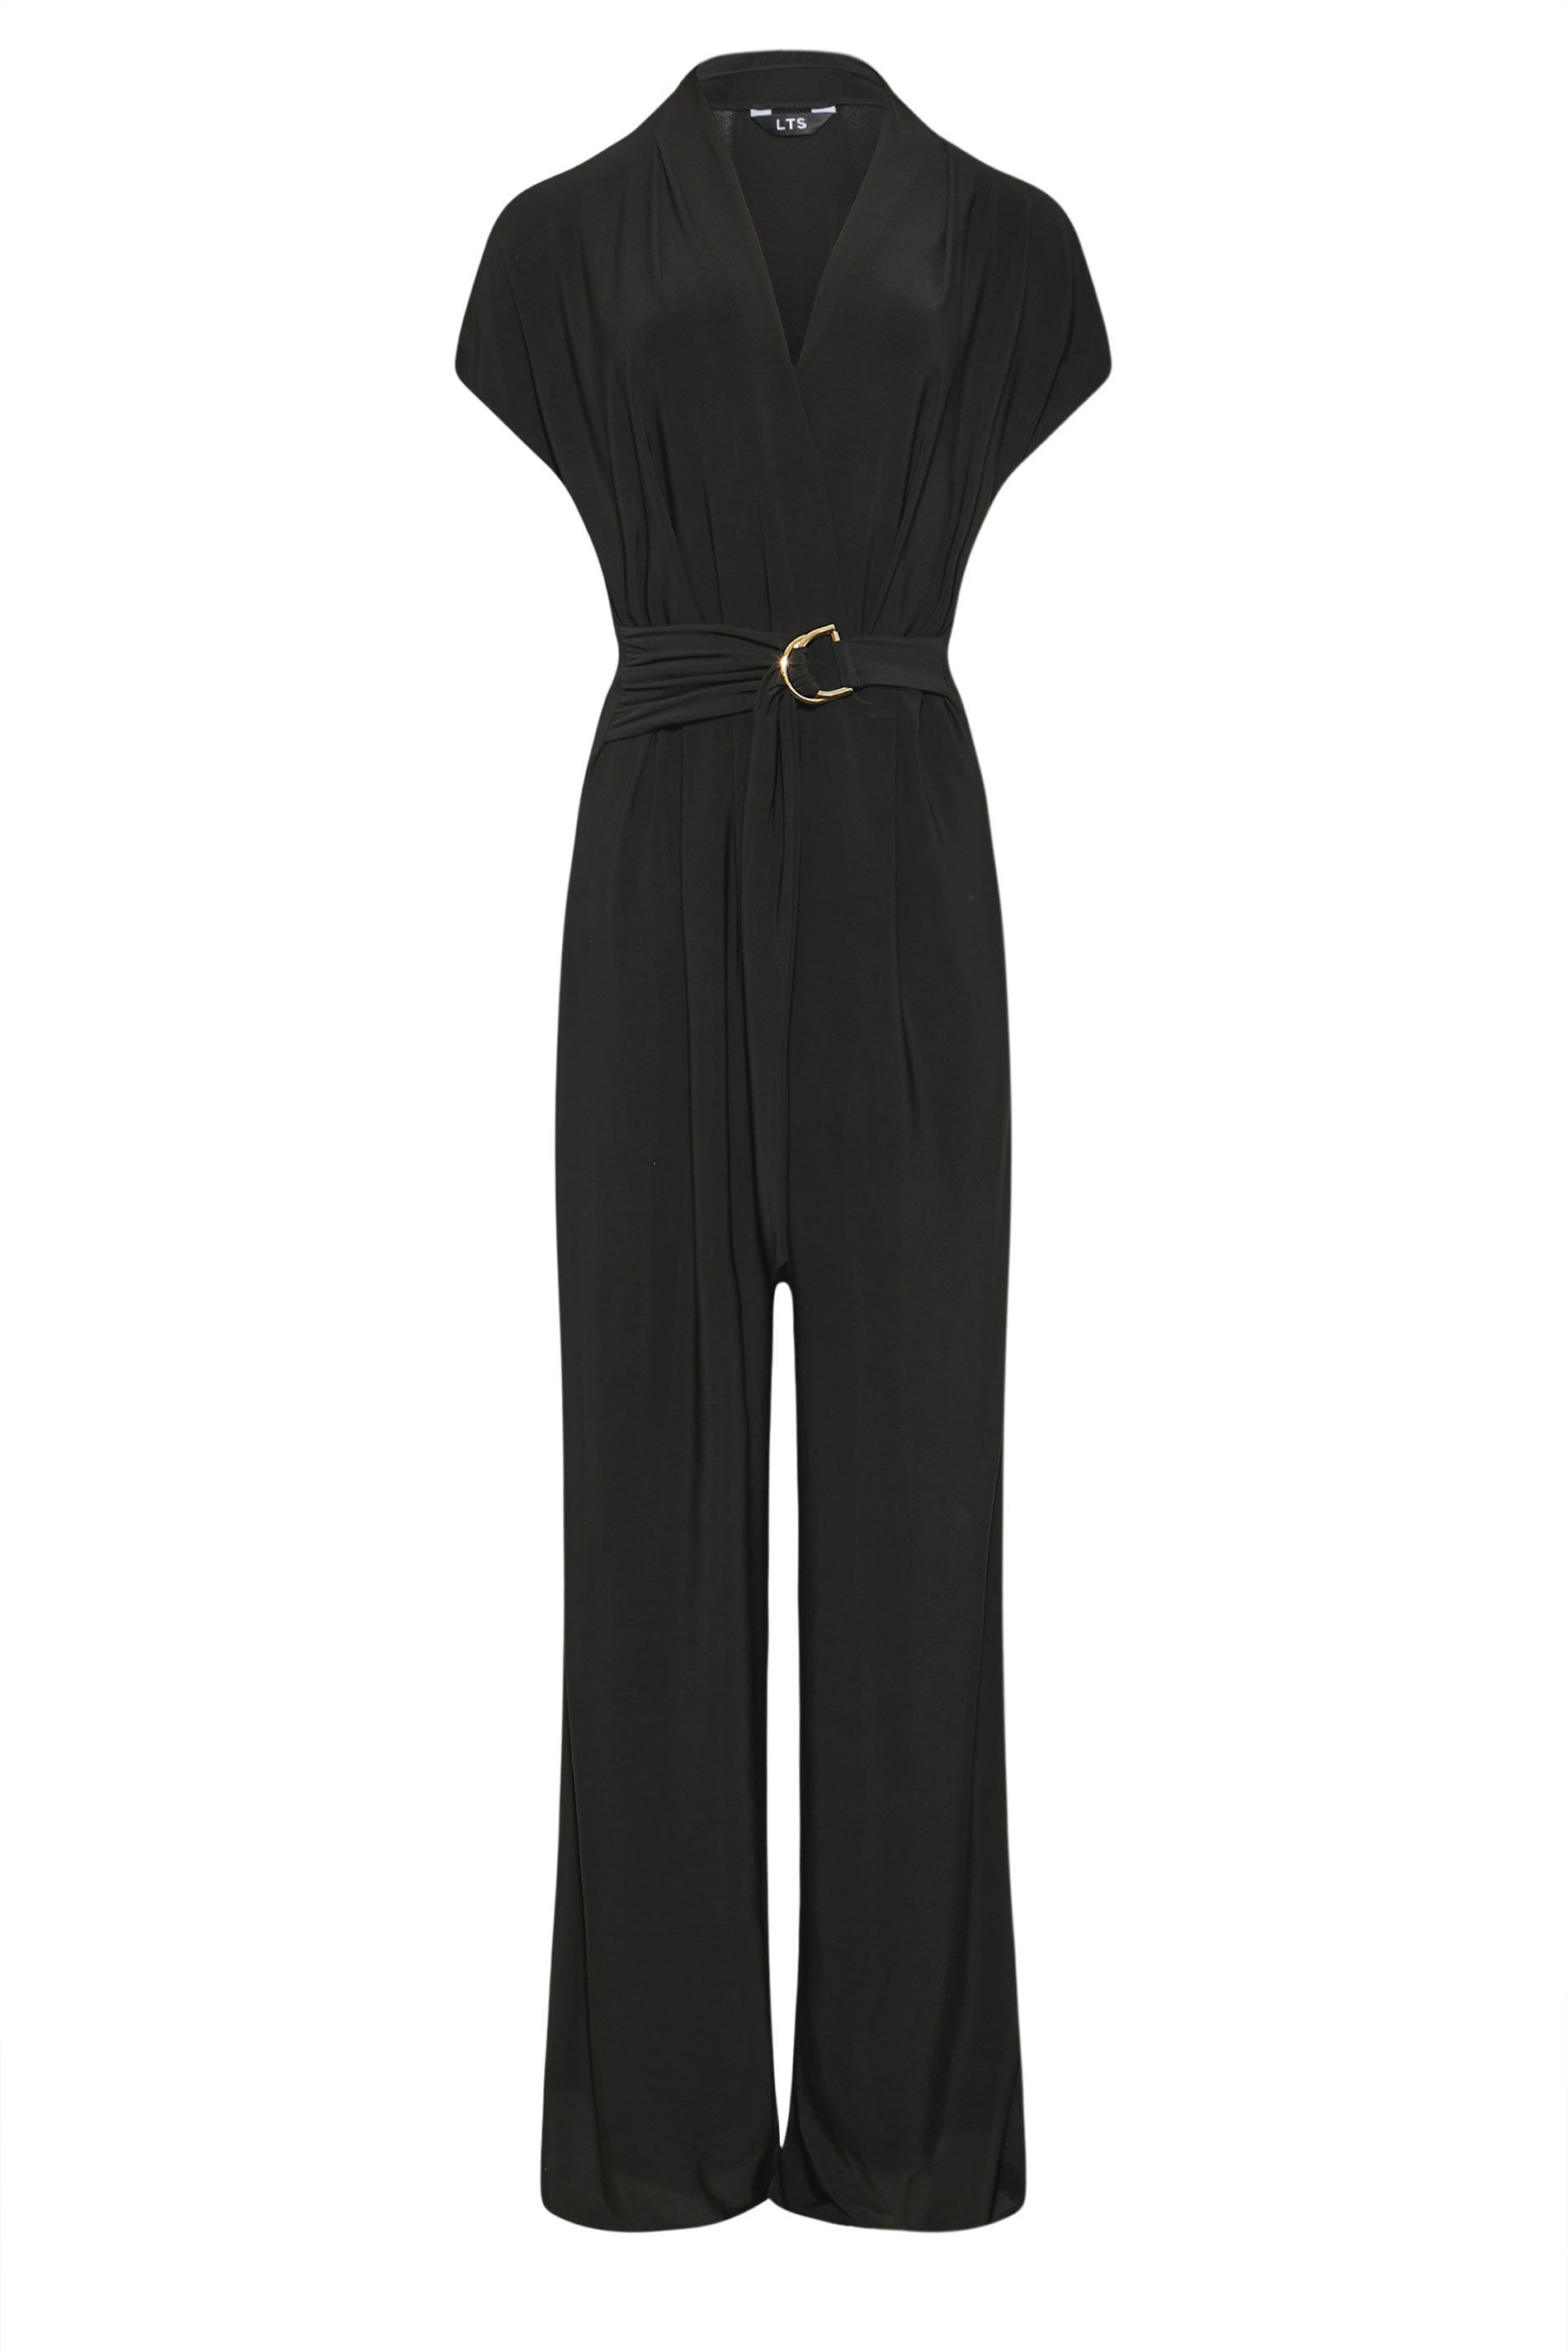 LTS Tall Women's Black Wrap Jumpsuit | Long Tall Sally